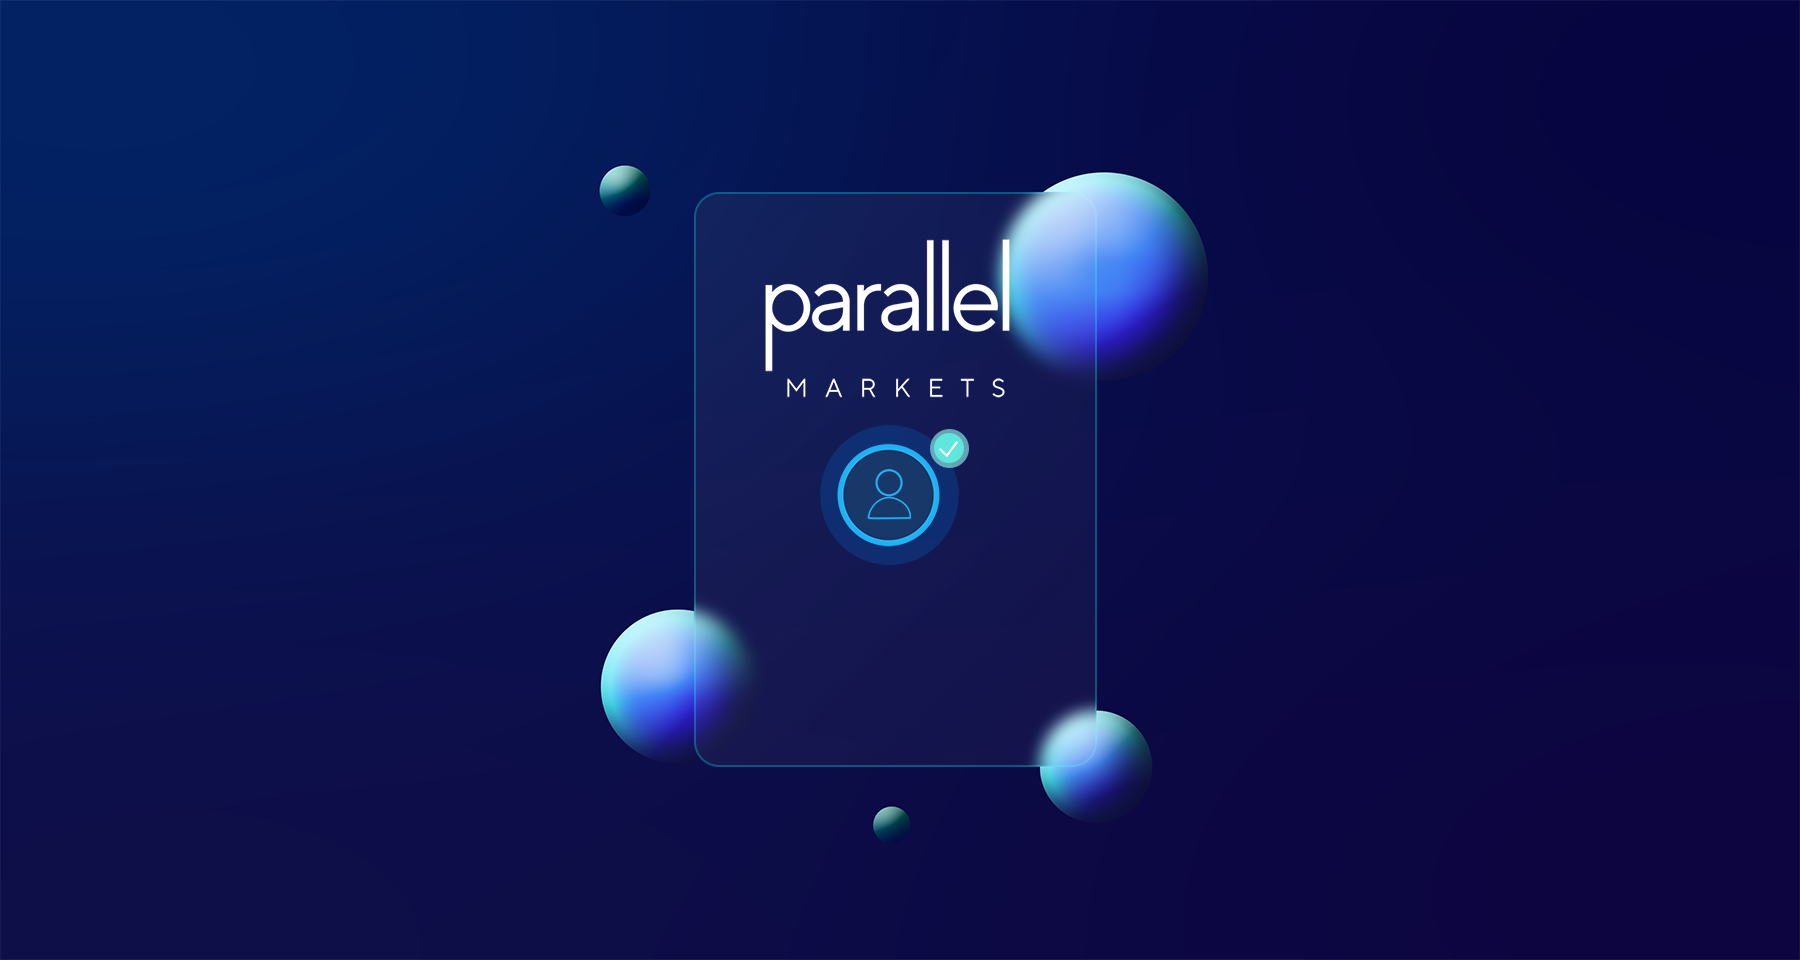 Parallel markets logo